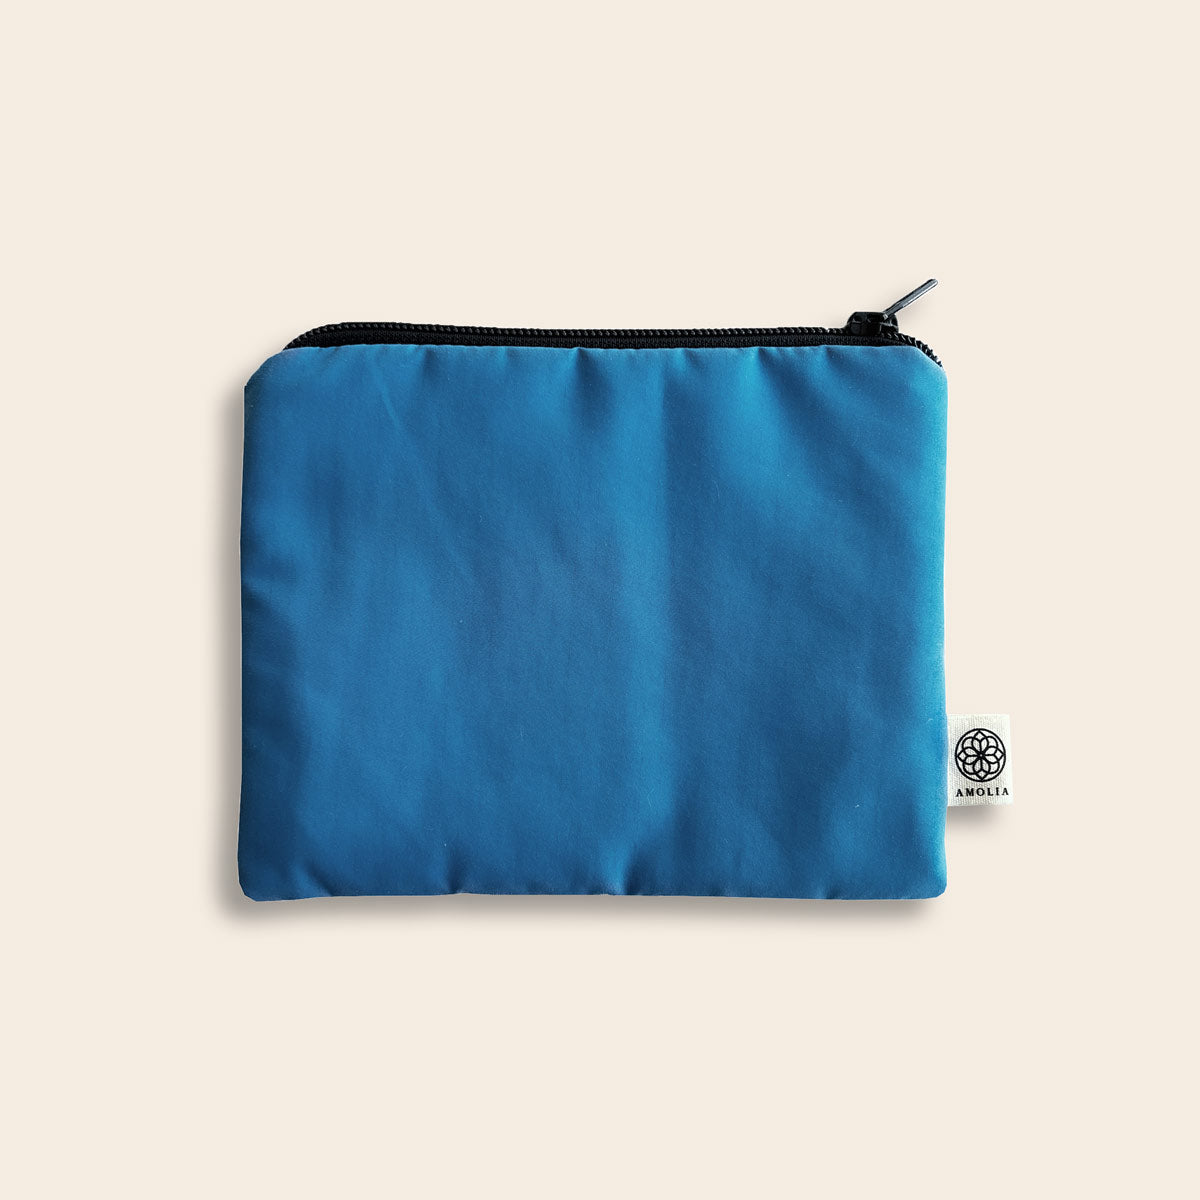 Upcycled bag, small, blue